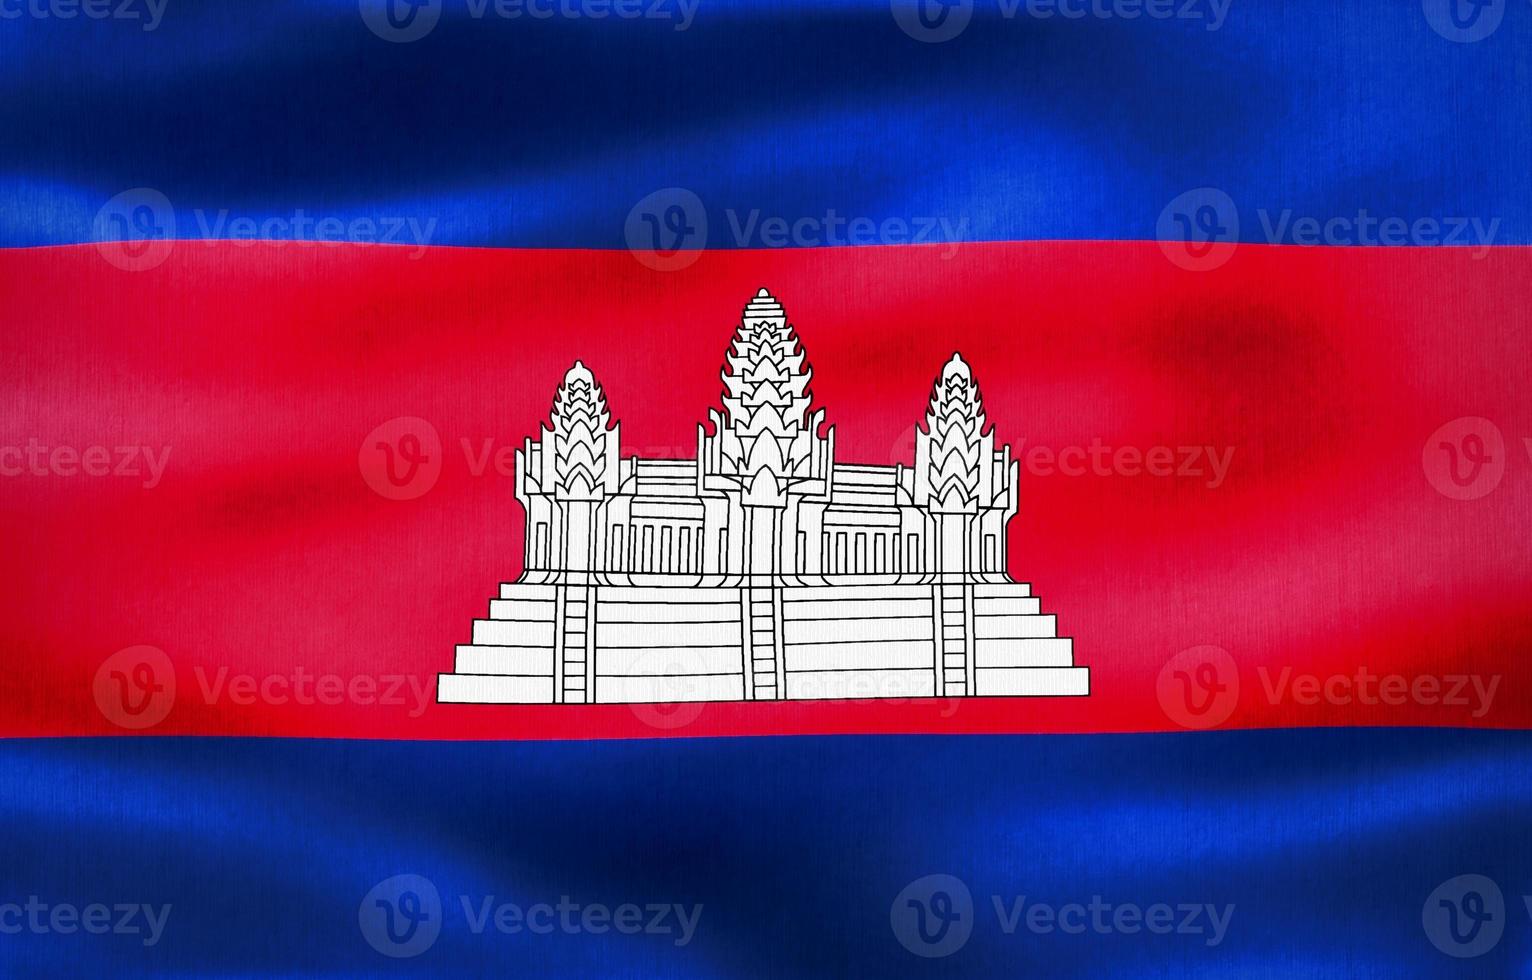 3D-Illustration of a Cambodia flag - realistic waving fabric flag photo